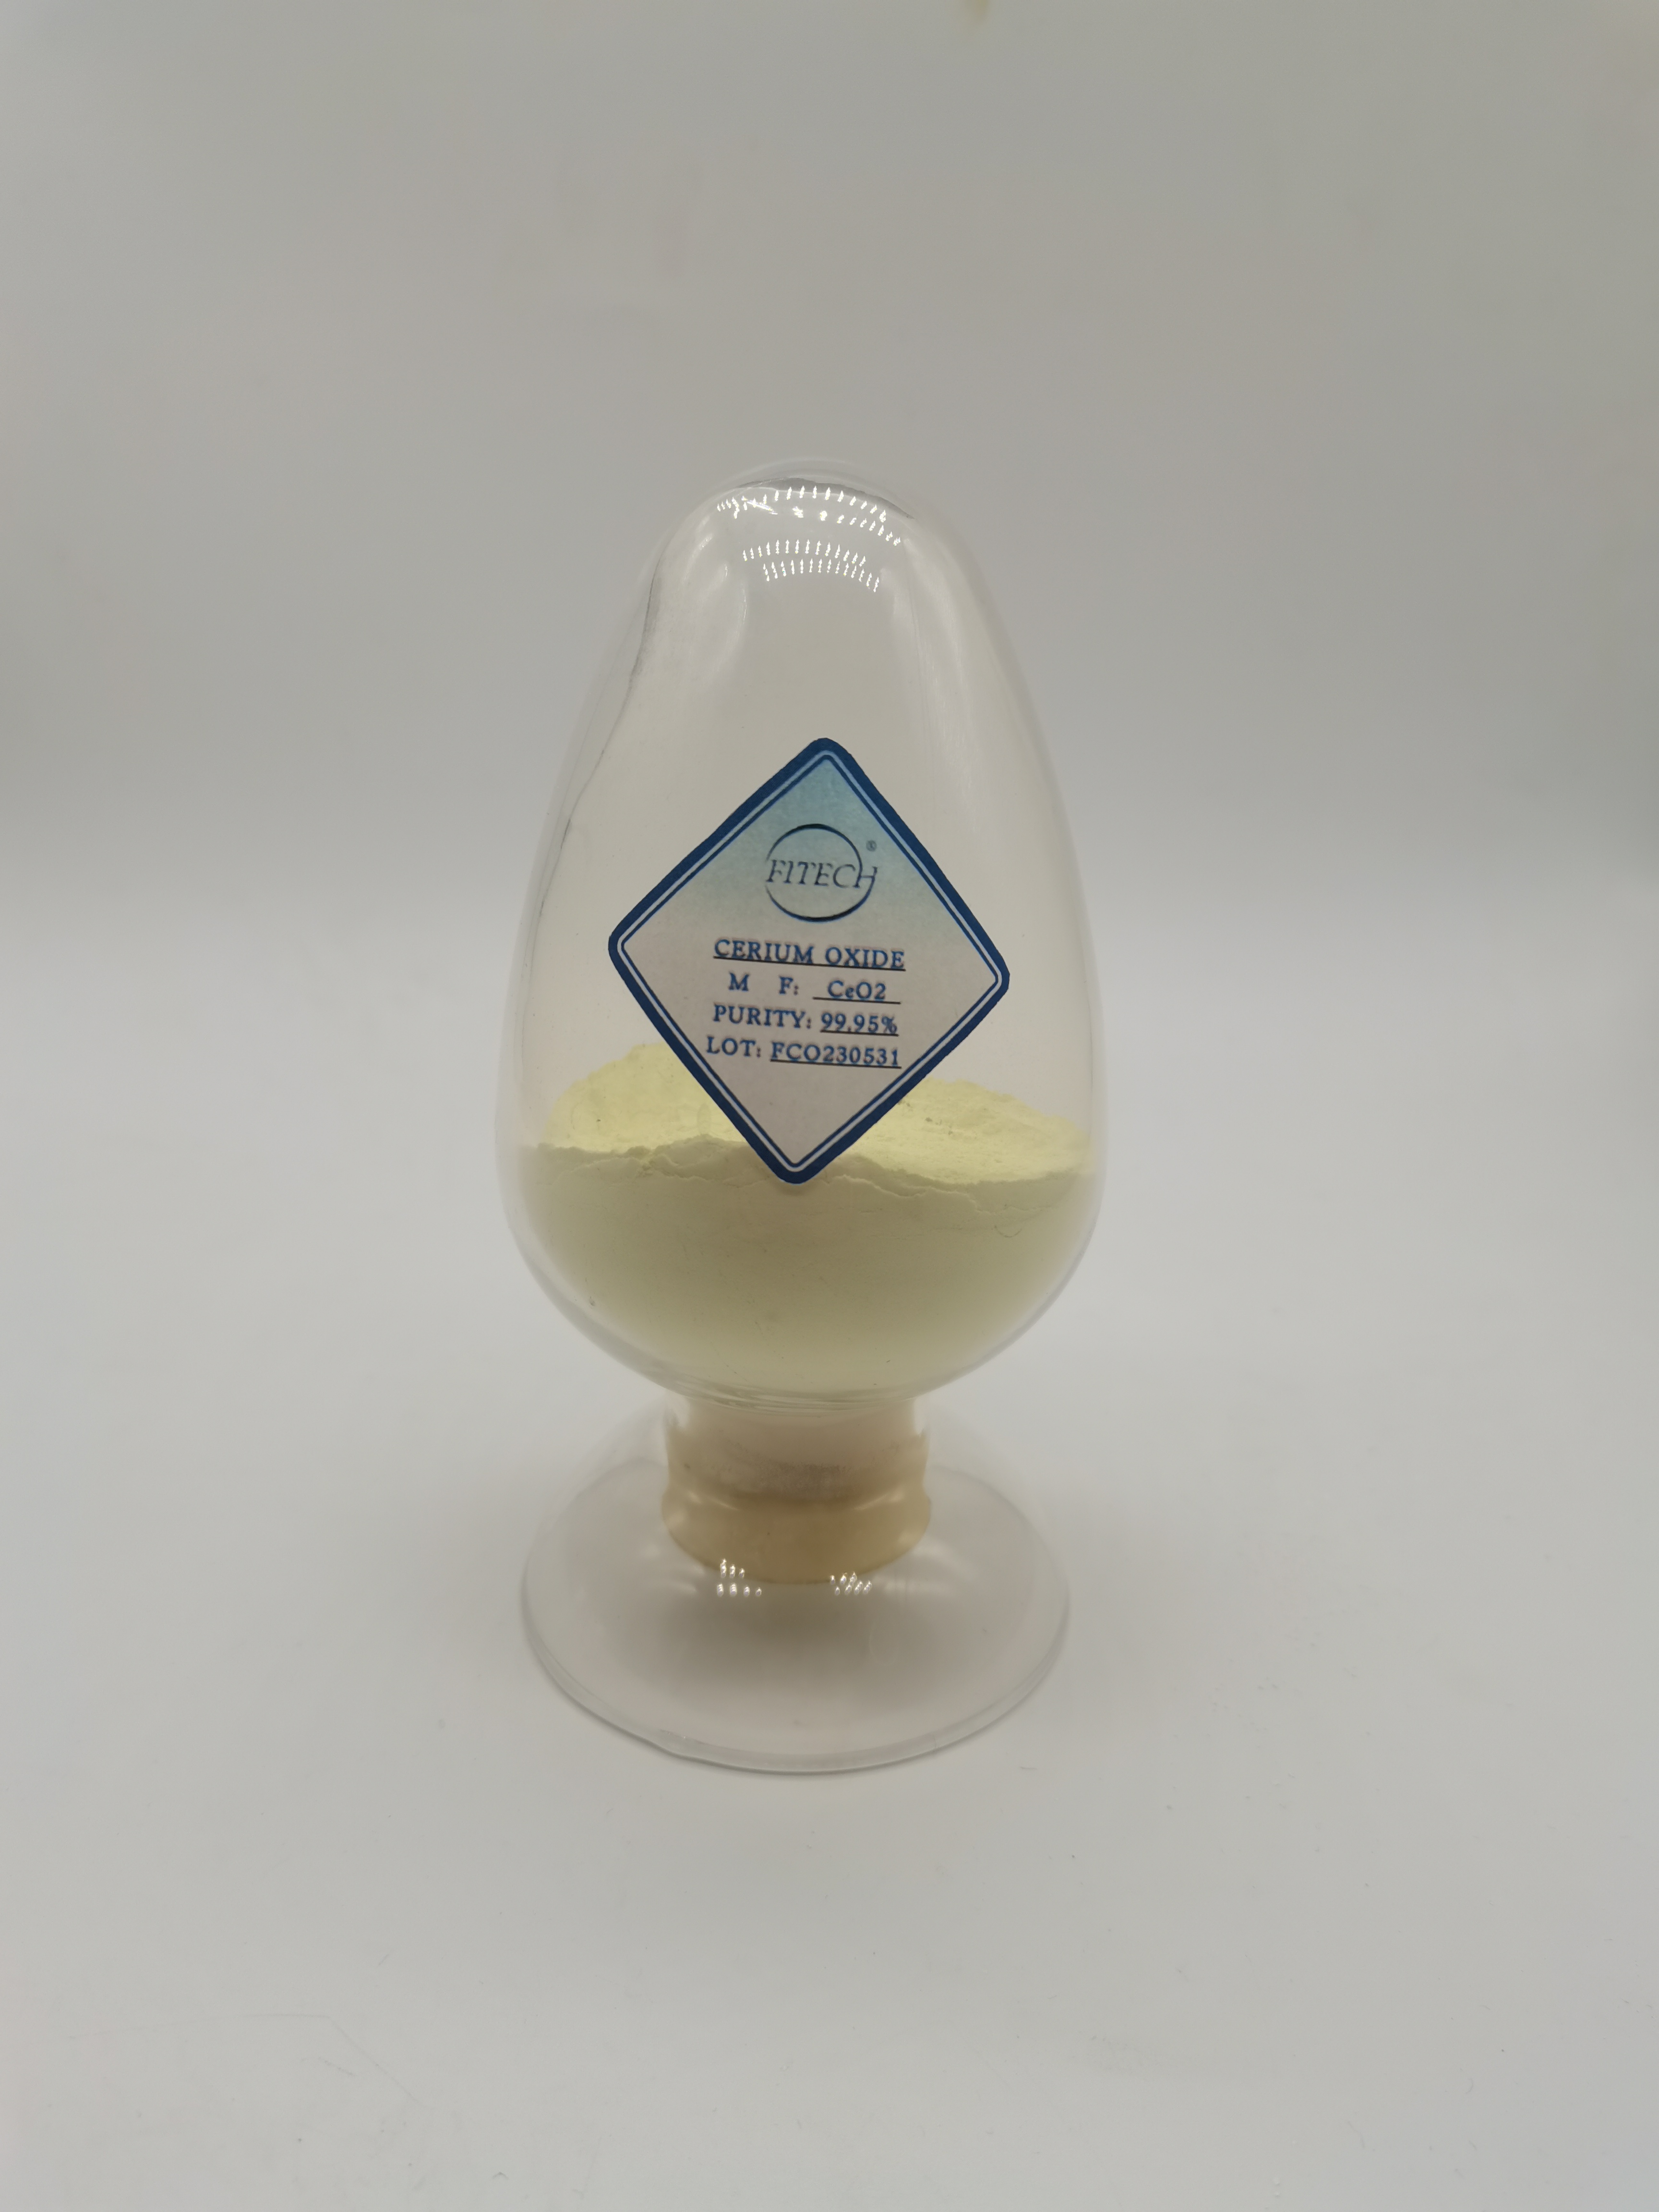 Polishing Powder-Cerium oxide